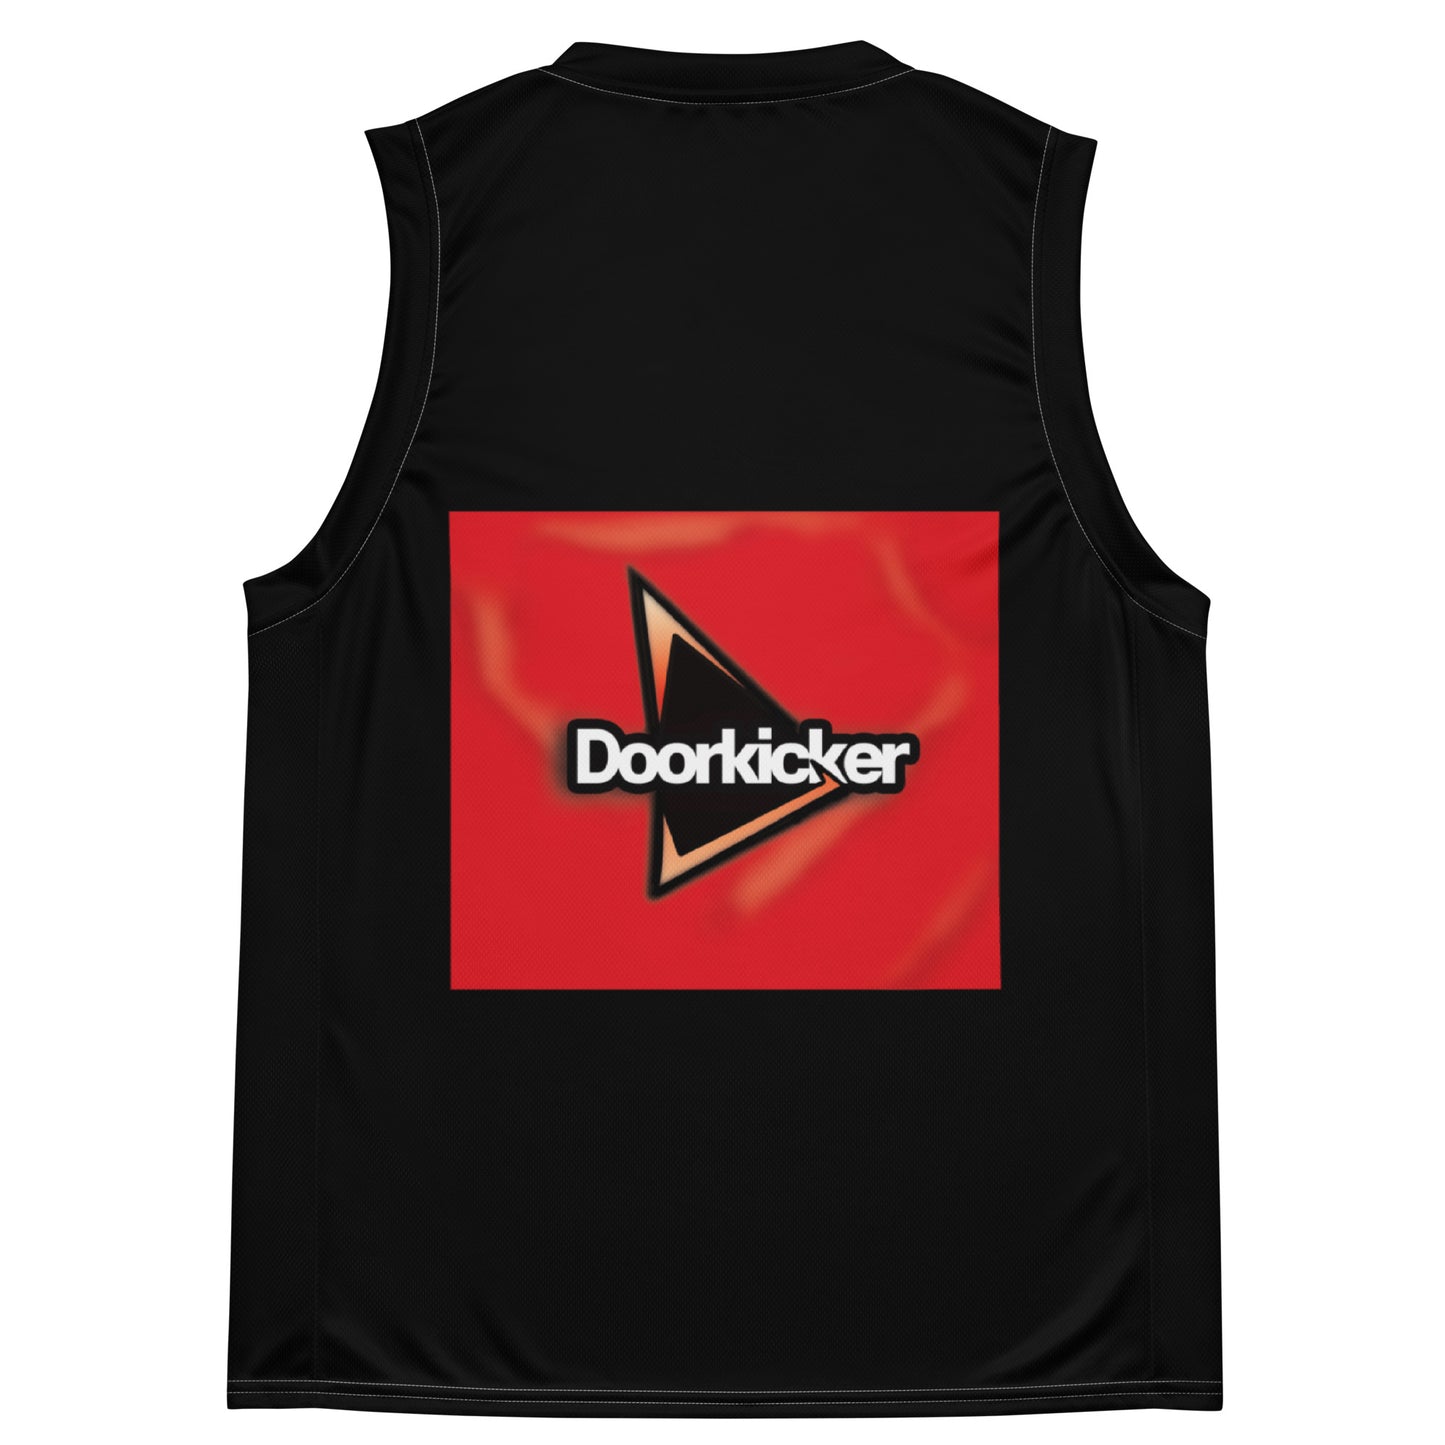 Doorkicker Recycled unisex basketball jersey